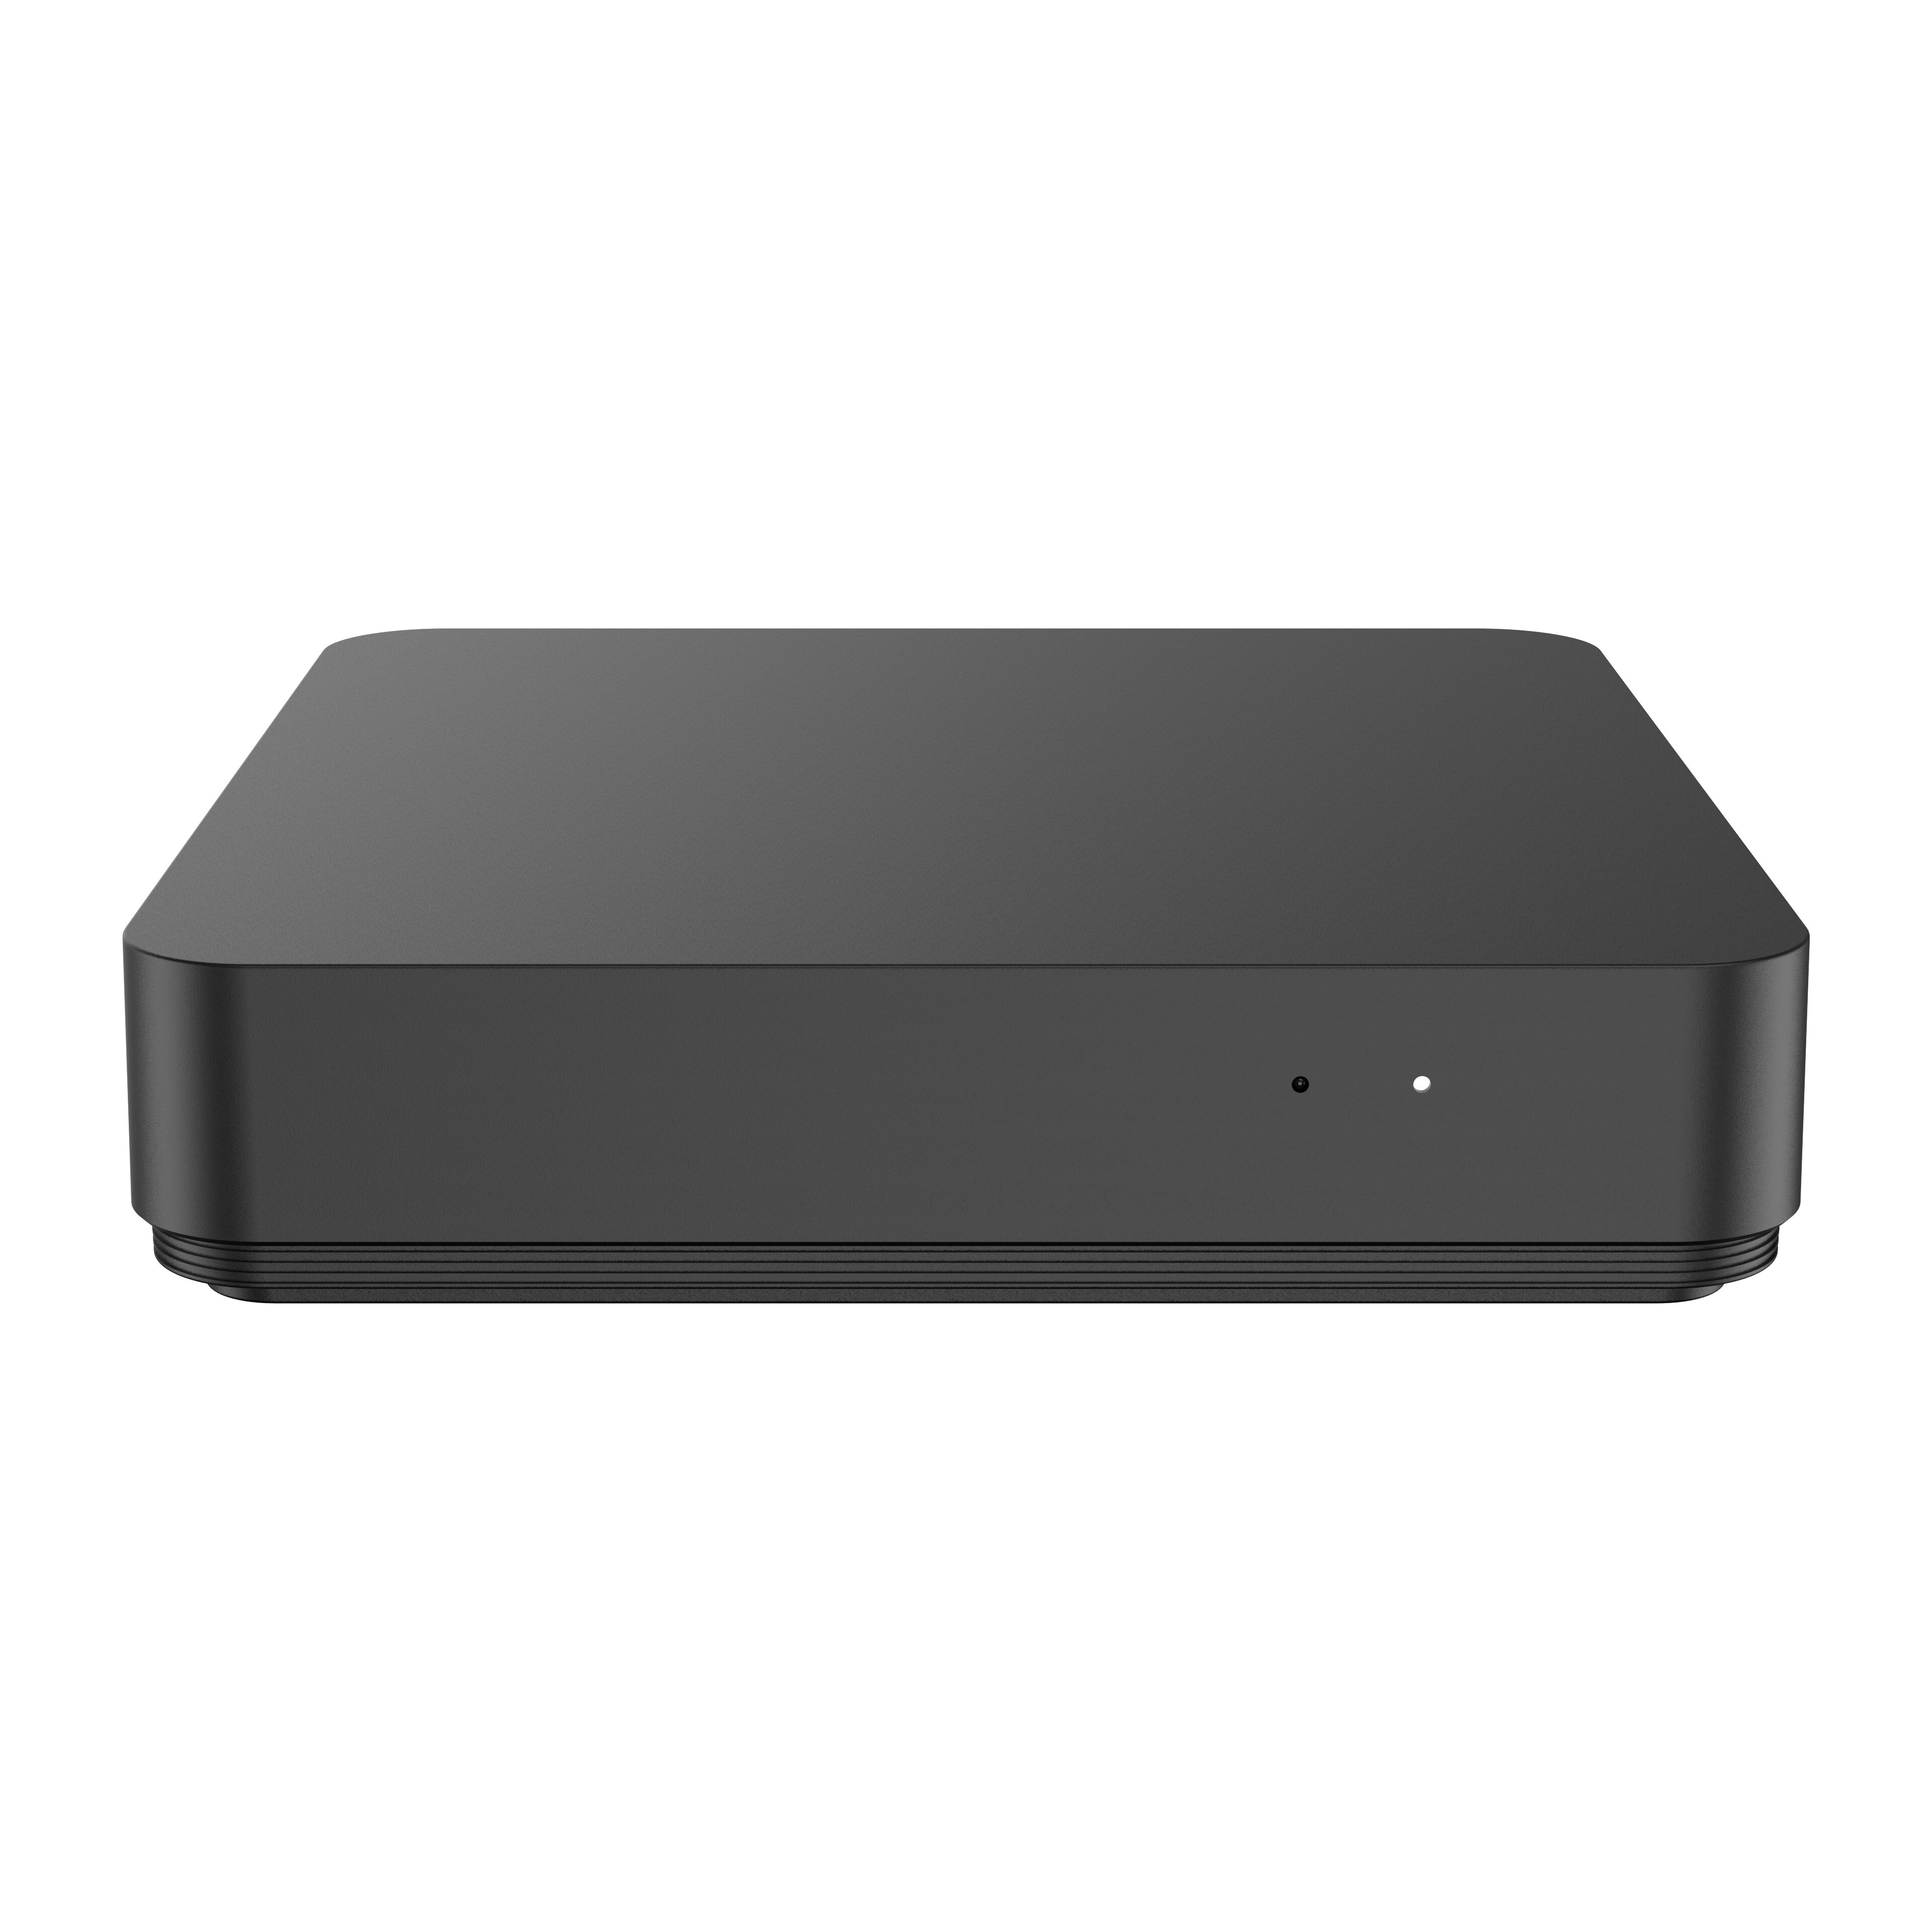 Elebao New Stlye Set Top Box X7mini S905L3 2.4/5G AC Wifi with BT Streaming TV Box